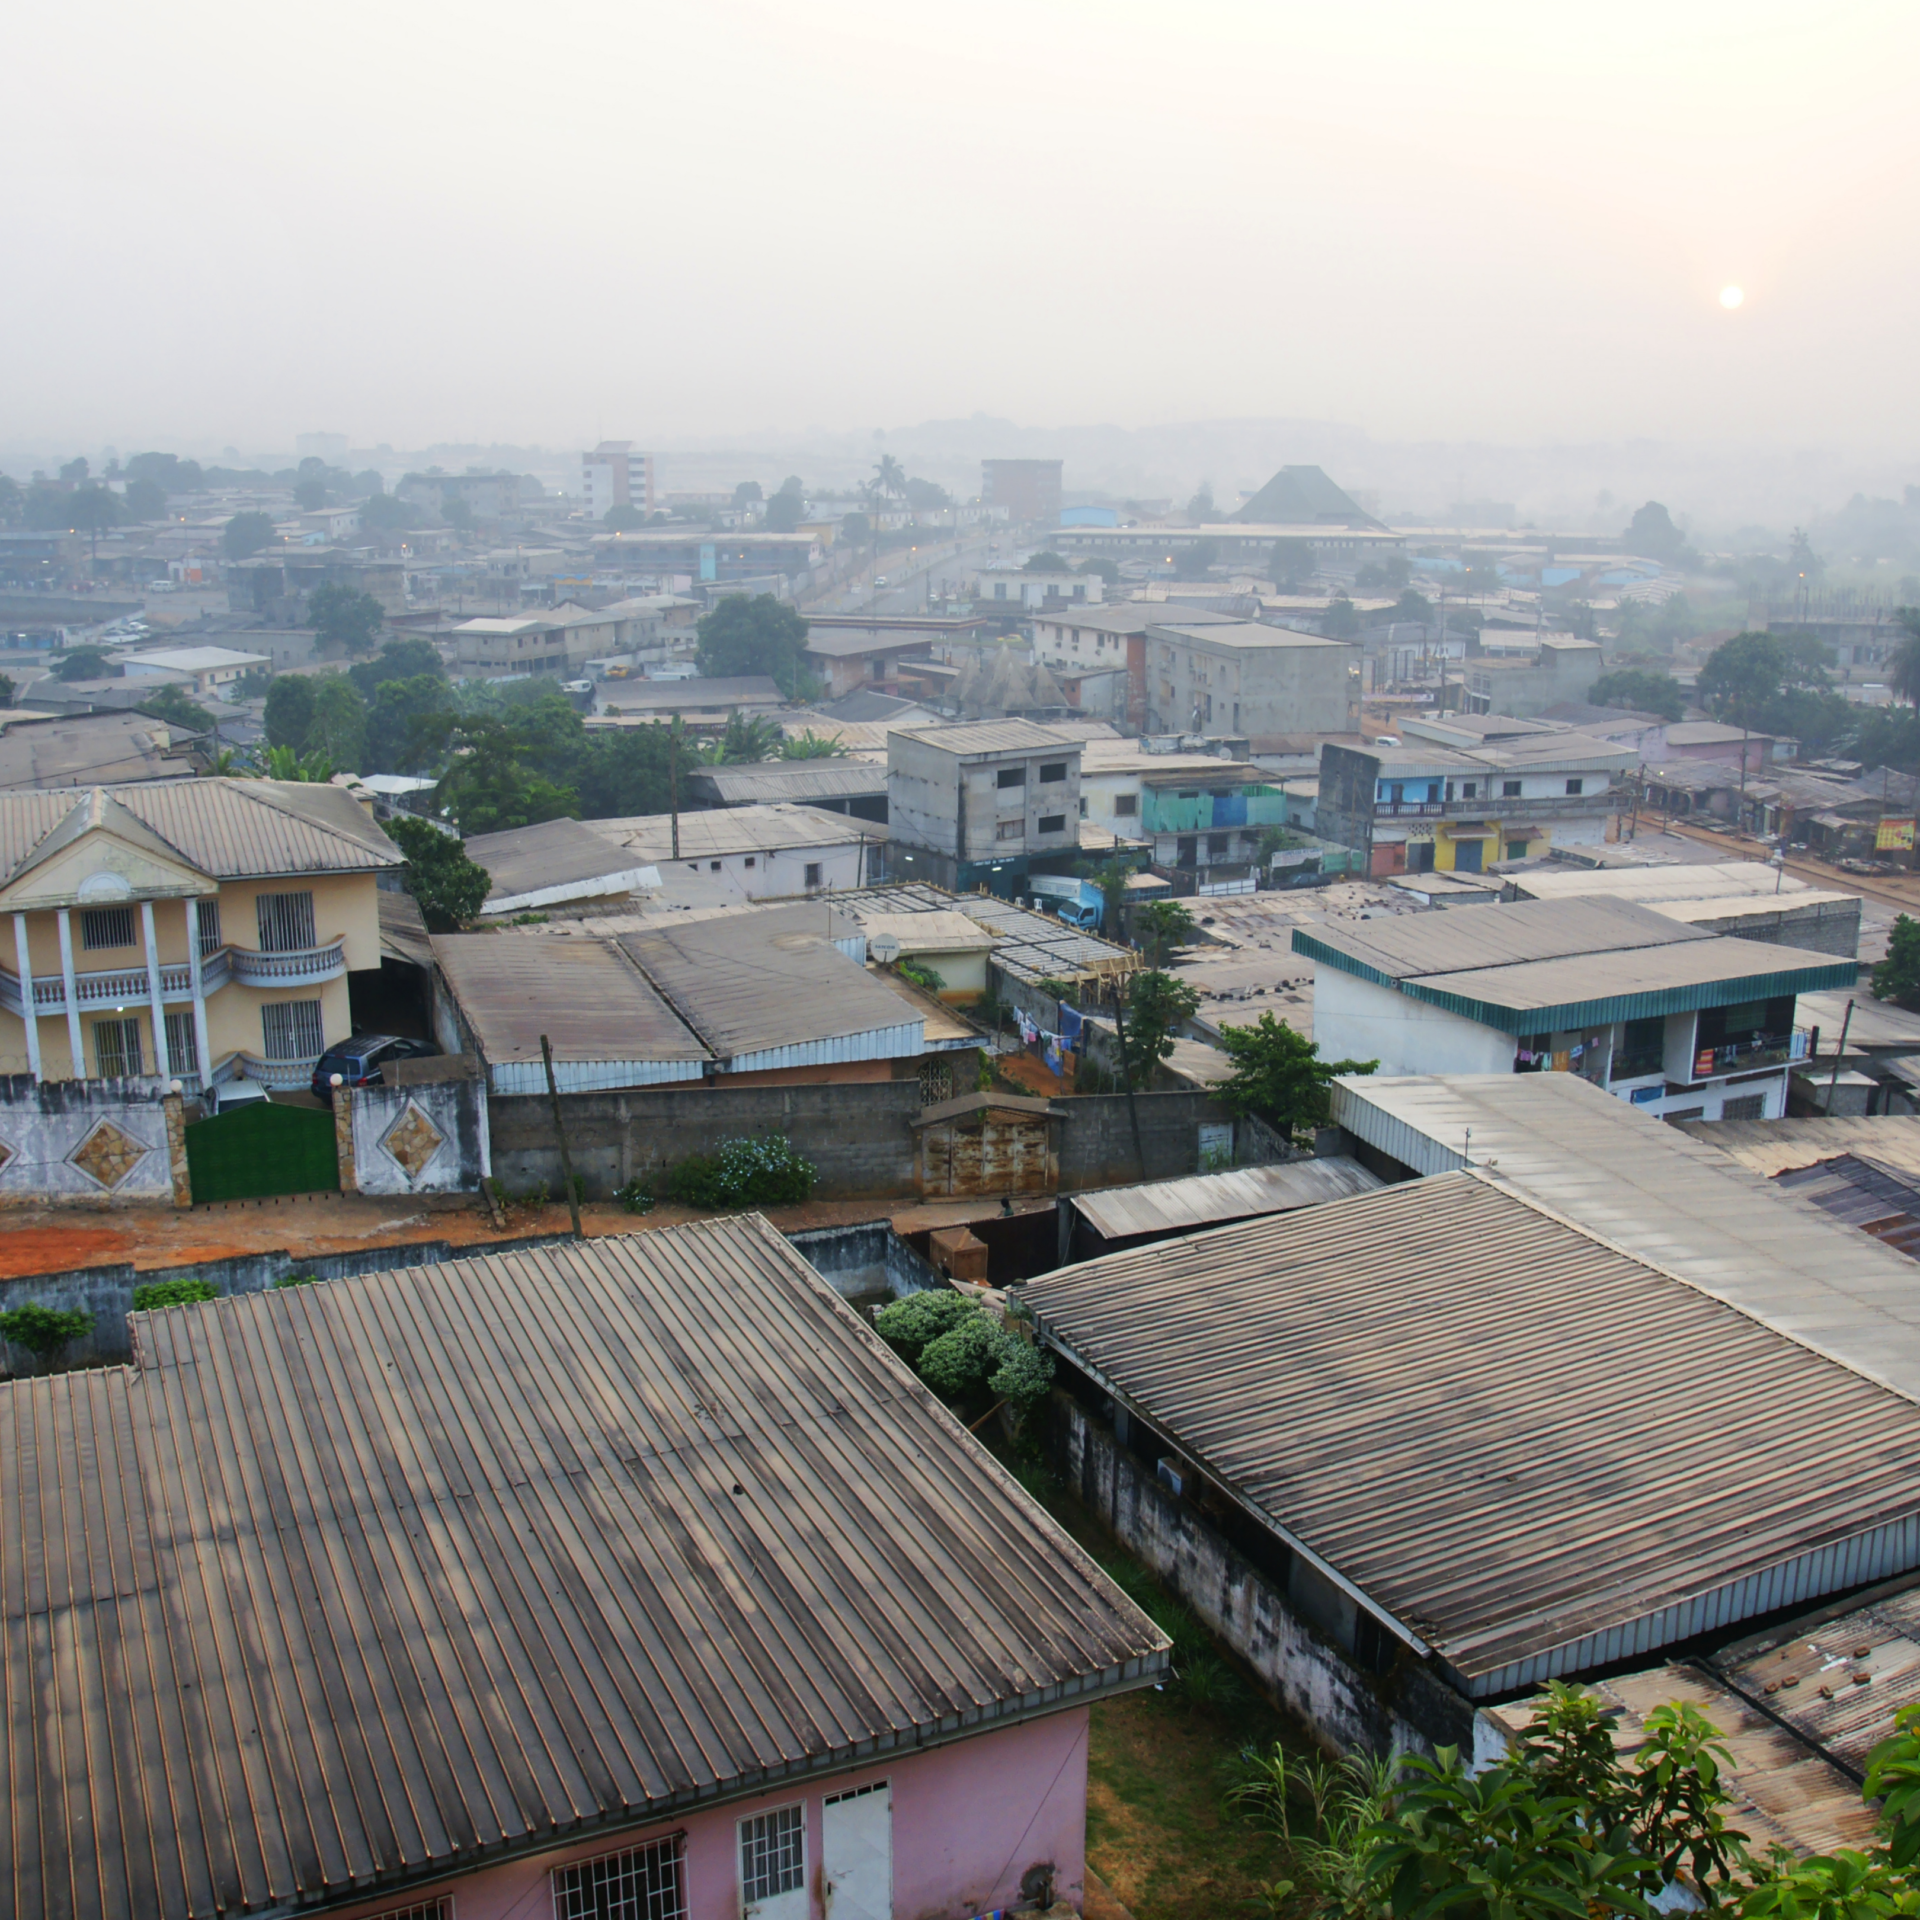 Hazy morning in Yaounde, Cameroon